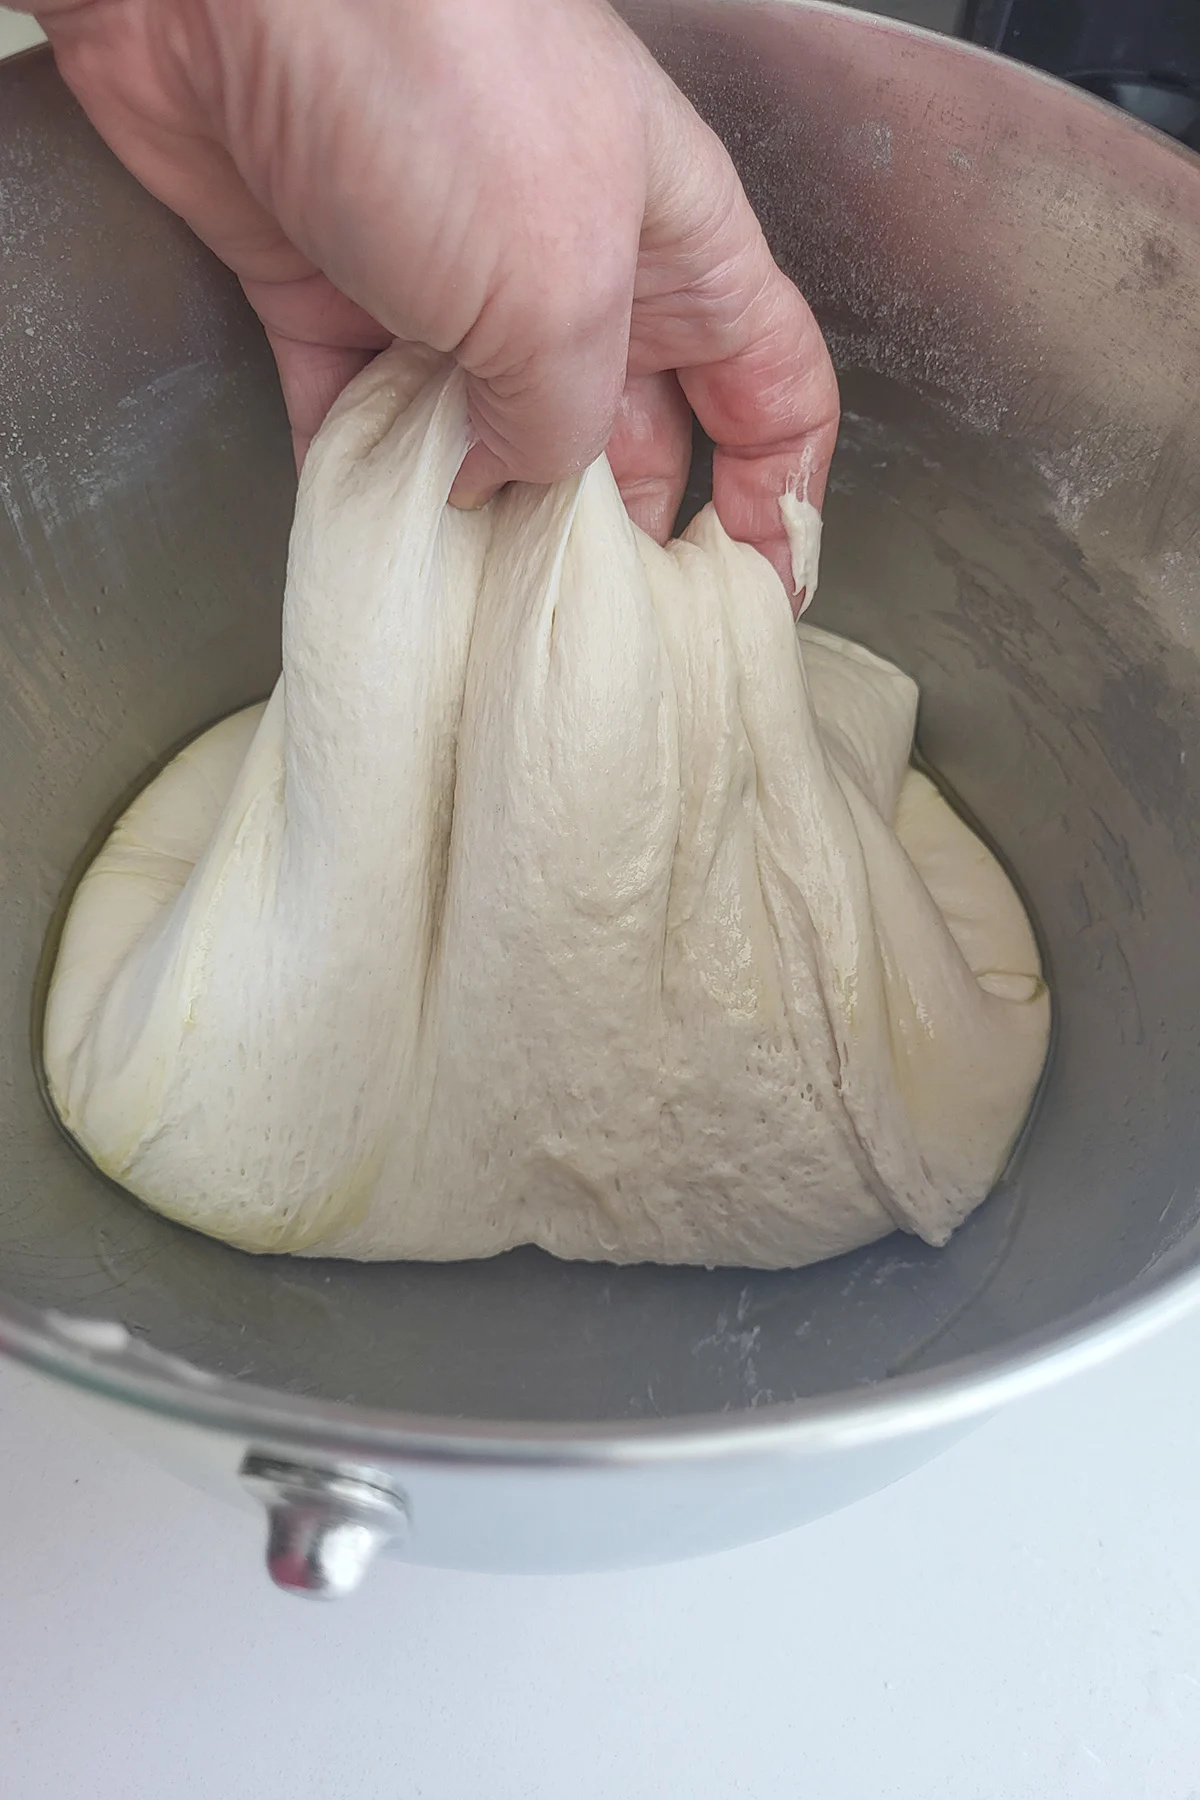 a hand folding dough in a bowl.